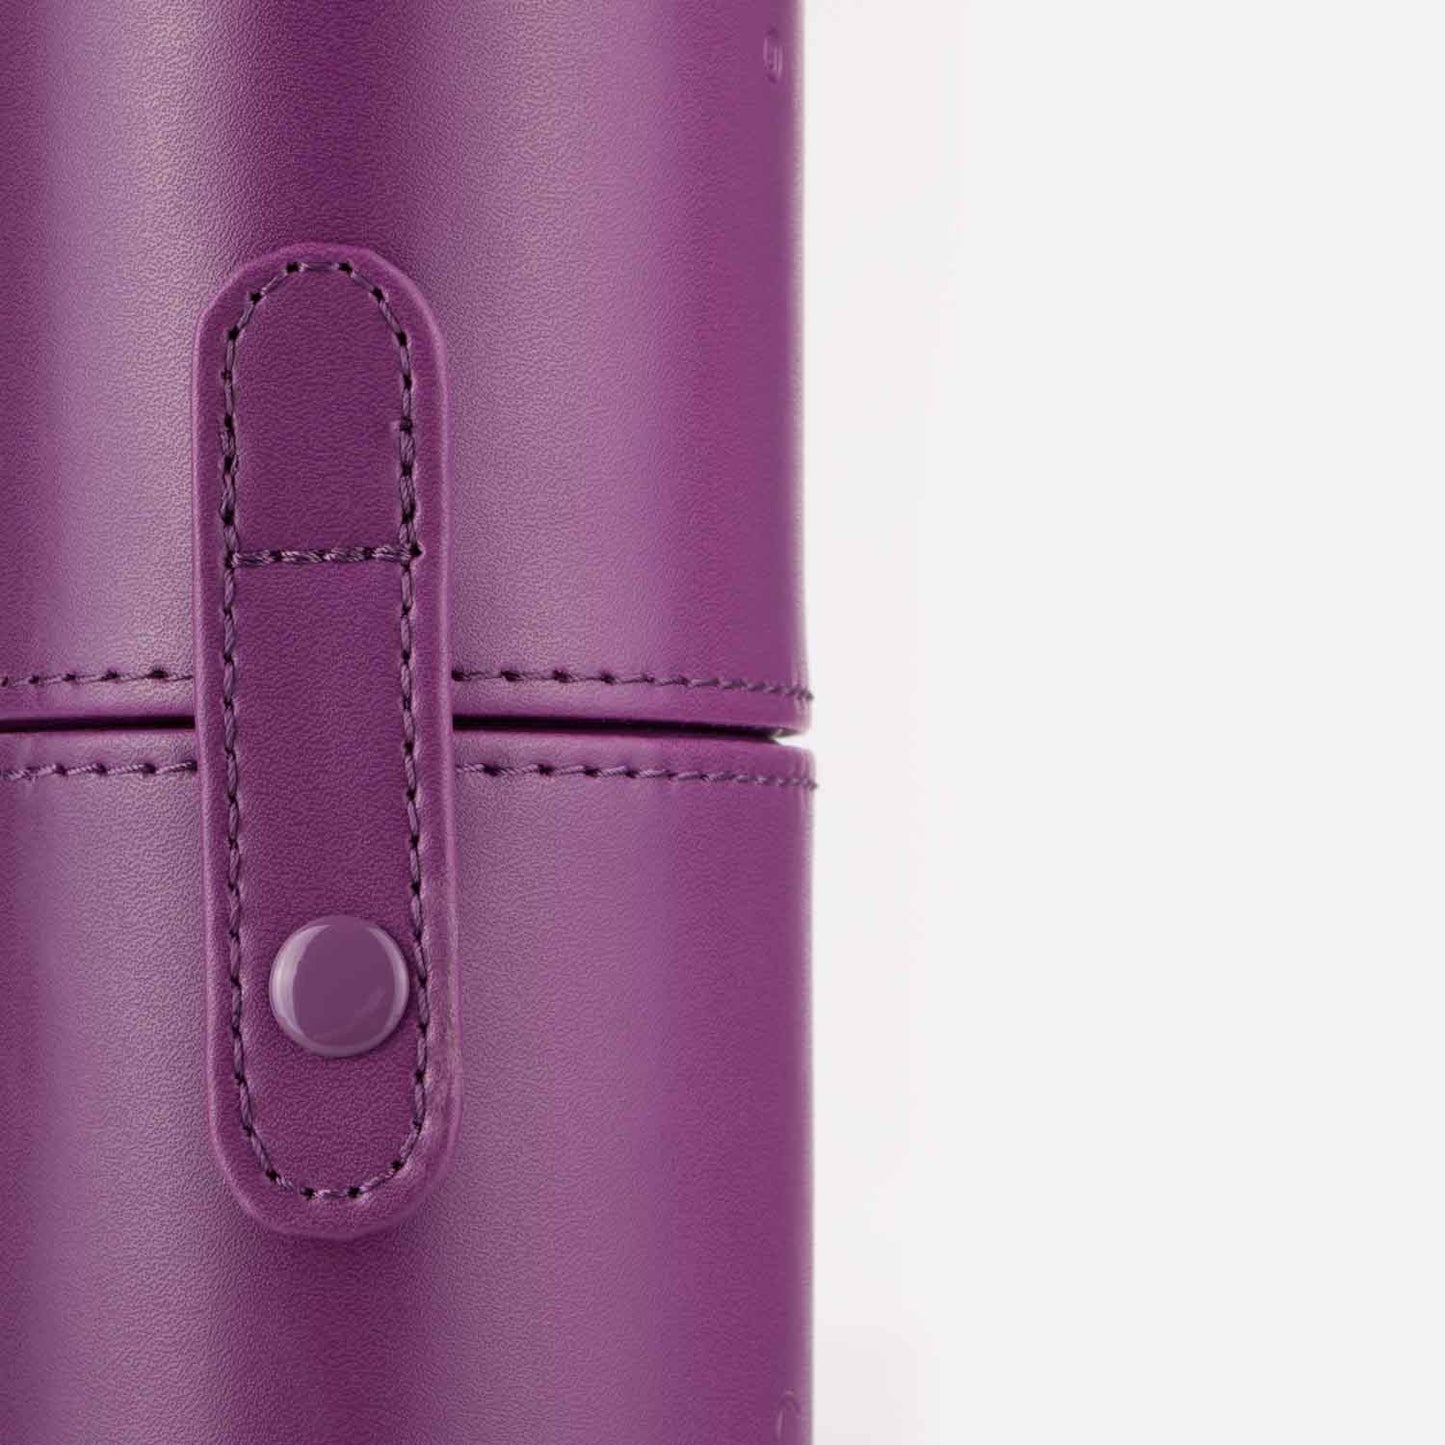 Sigma Beauty 12 Brush Kit Make Me Crazy In Purple